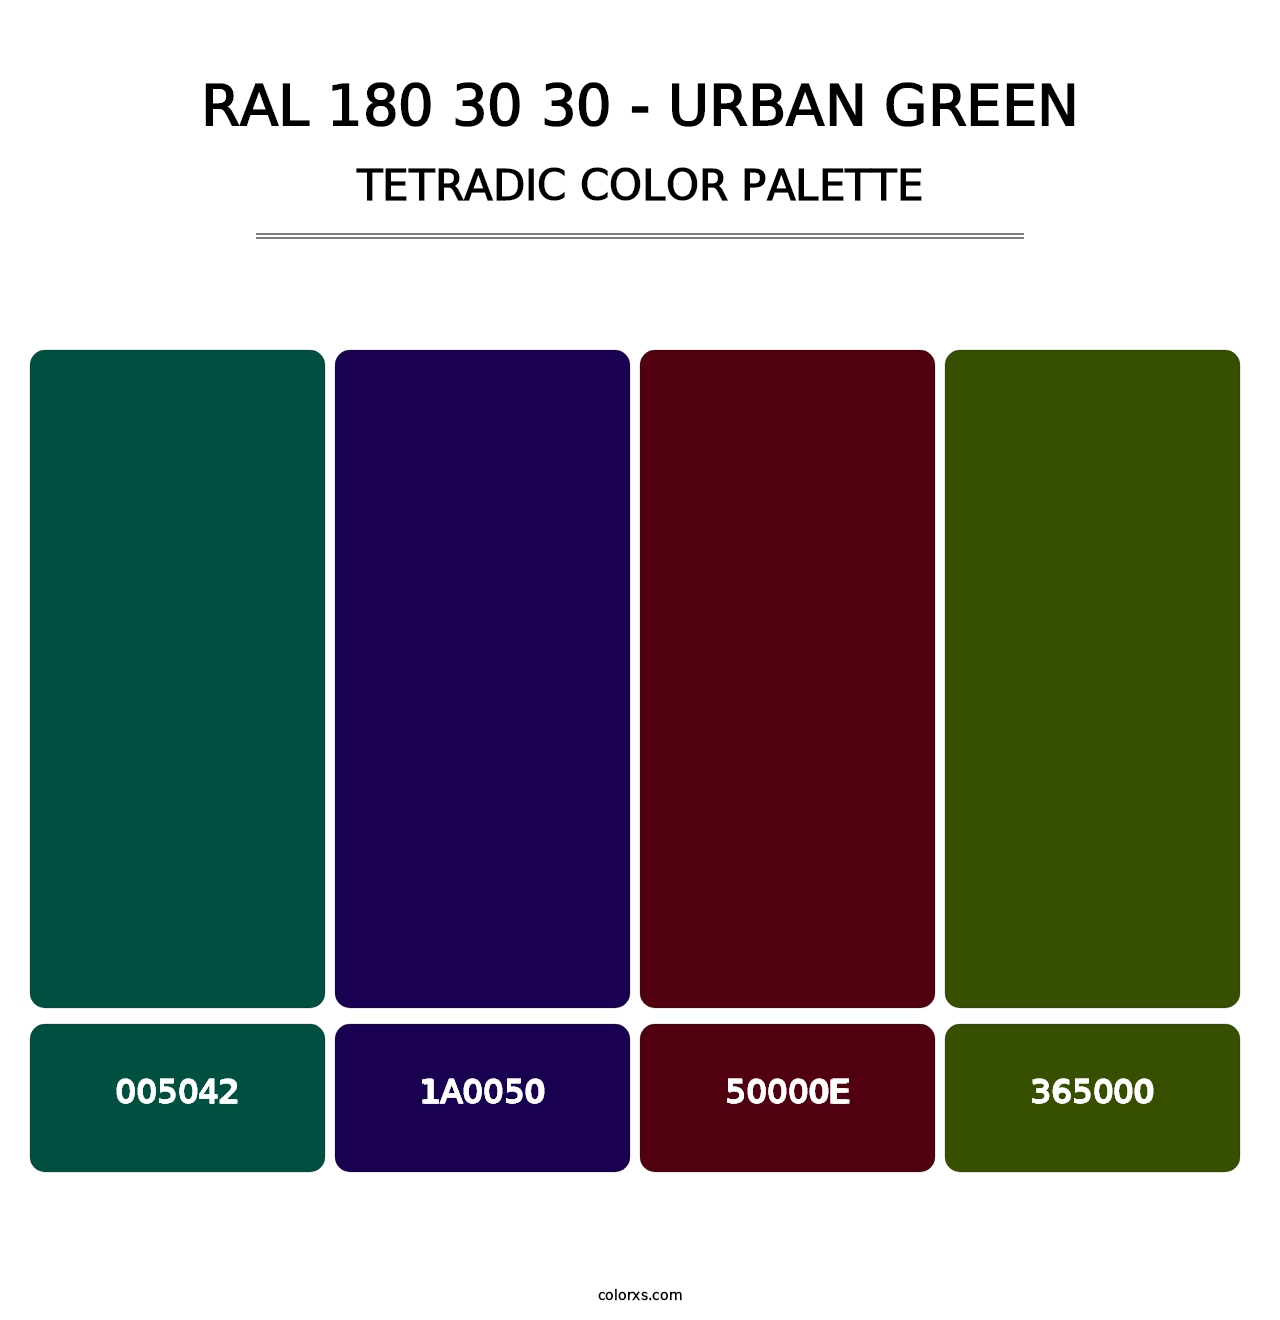 RAL 180 30 30 - Urban Green - Tetradic Color Palette